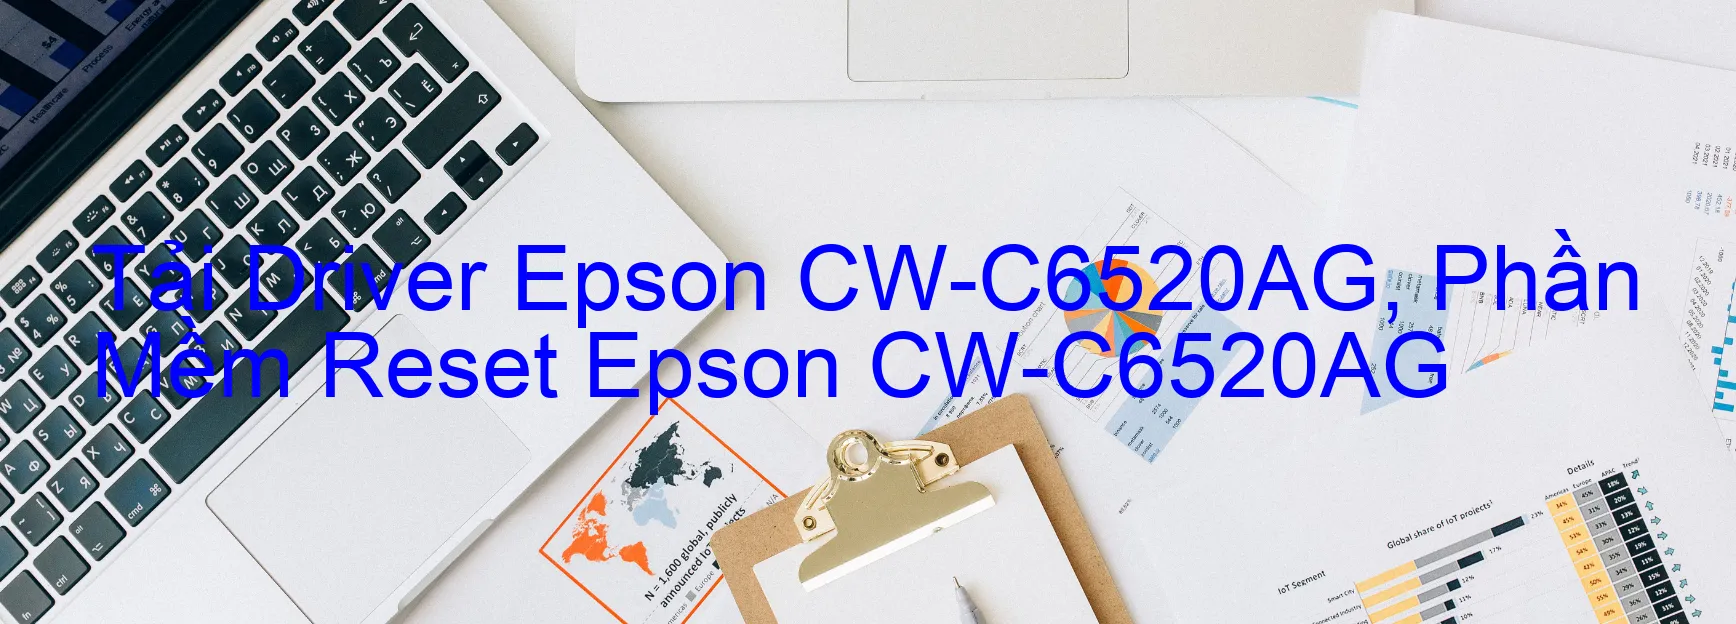 Driver Epson CW-C6520AG, Phần Mềm Reset Epson CW-C6520AG